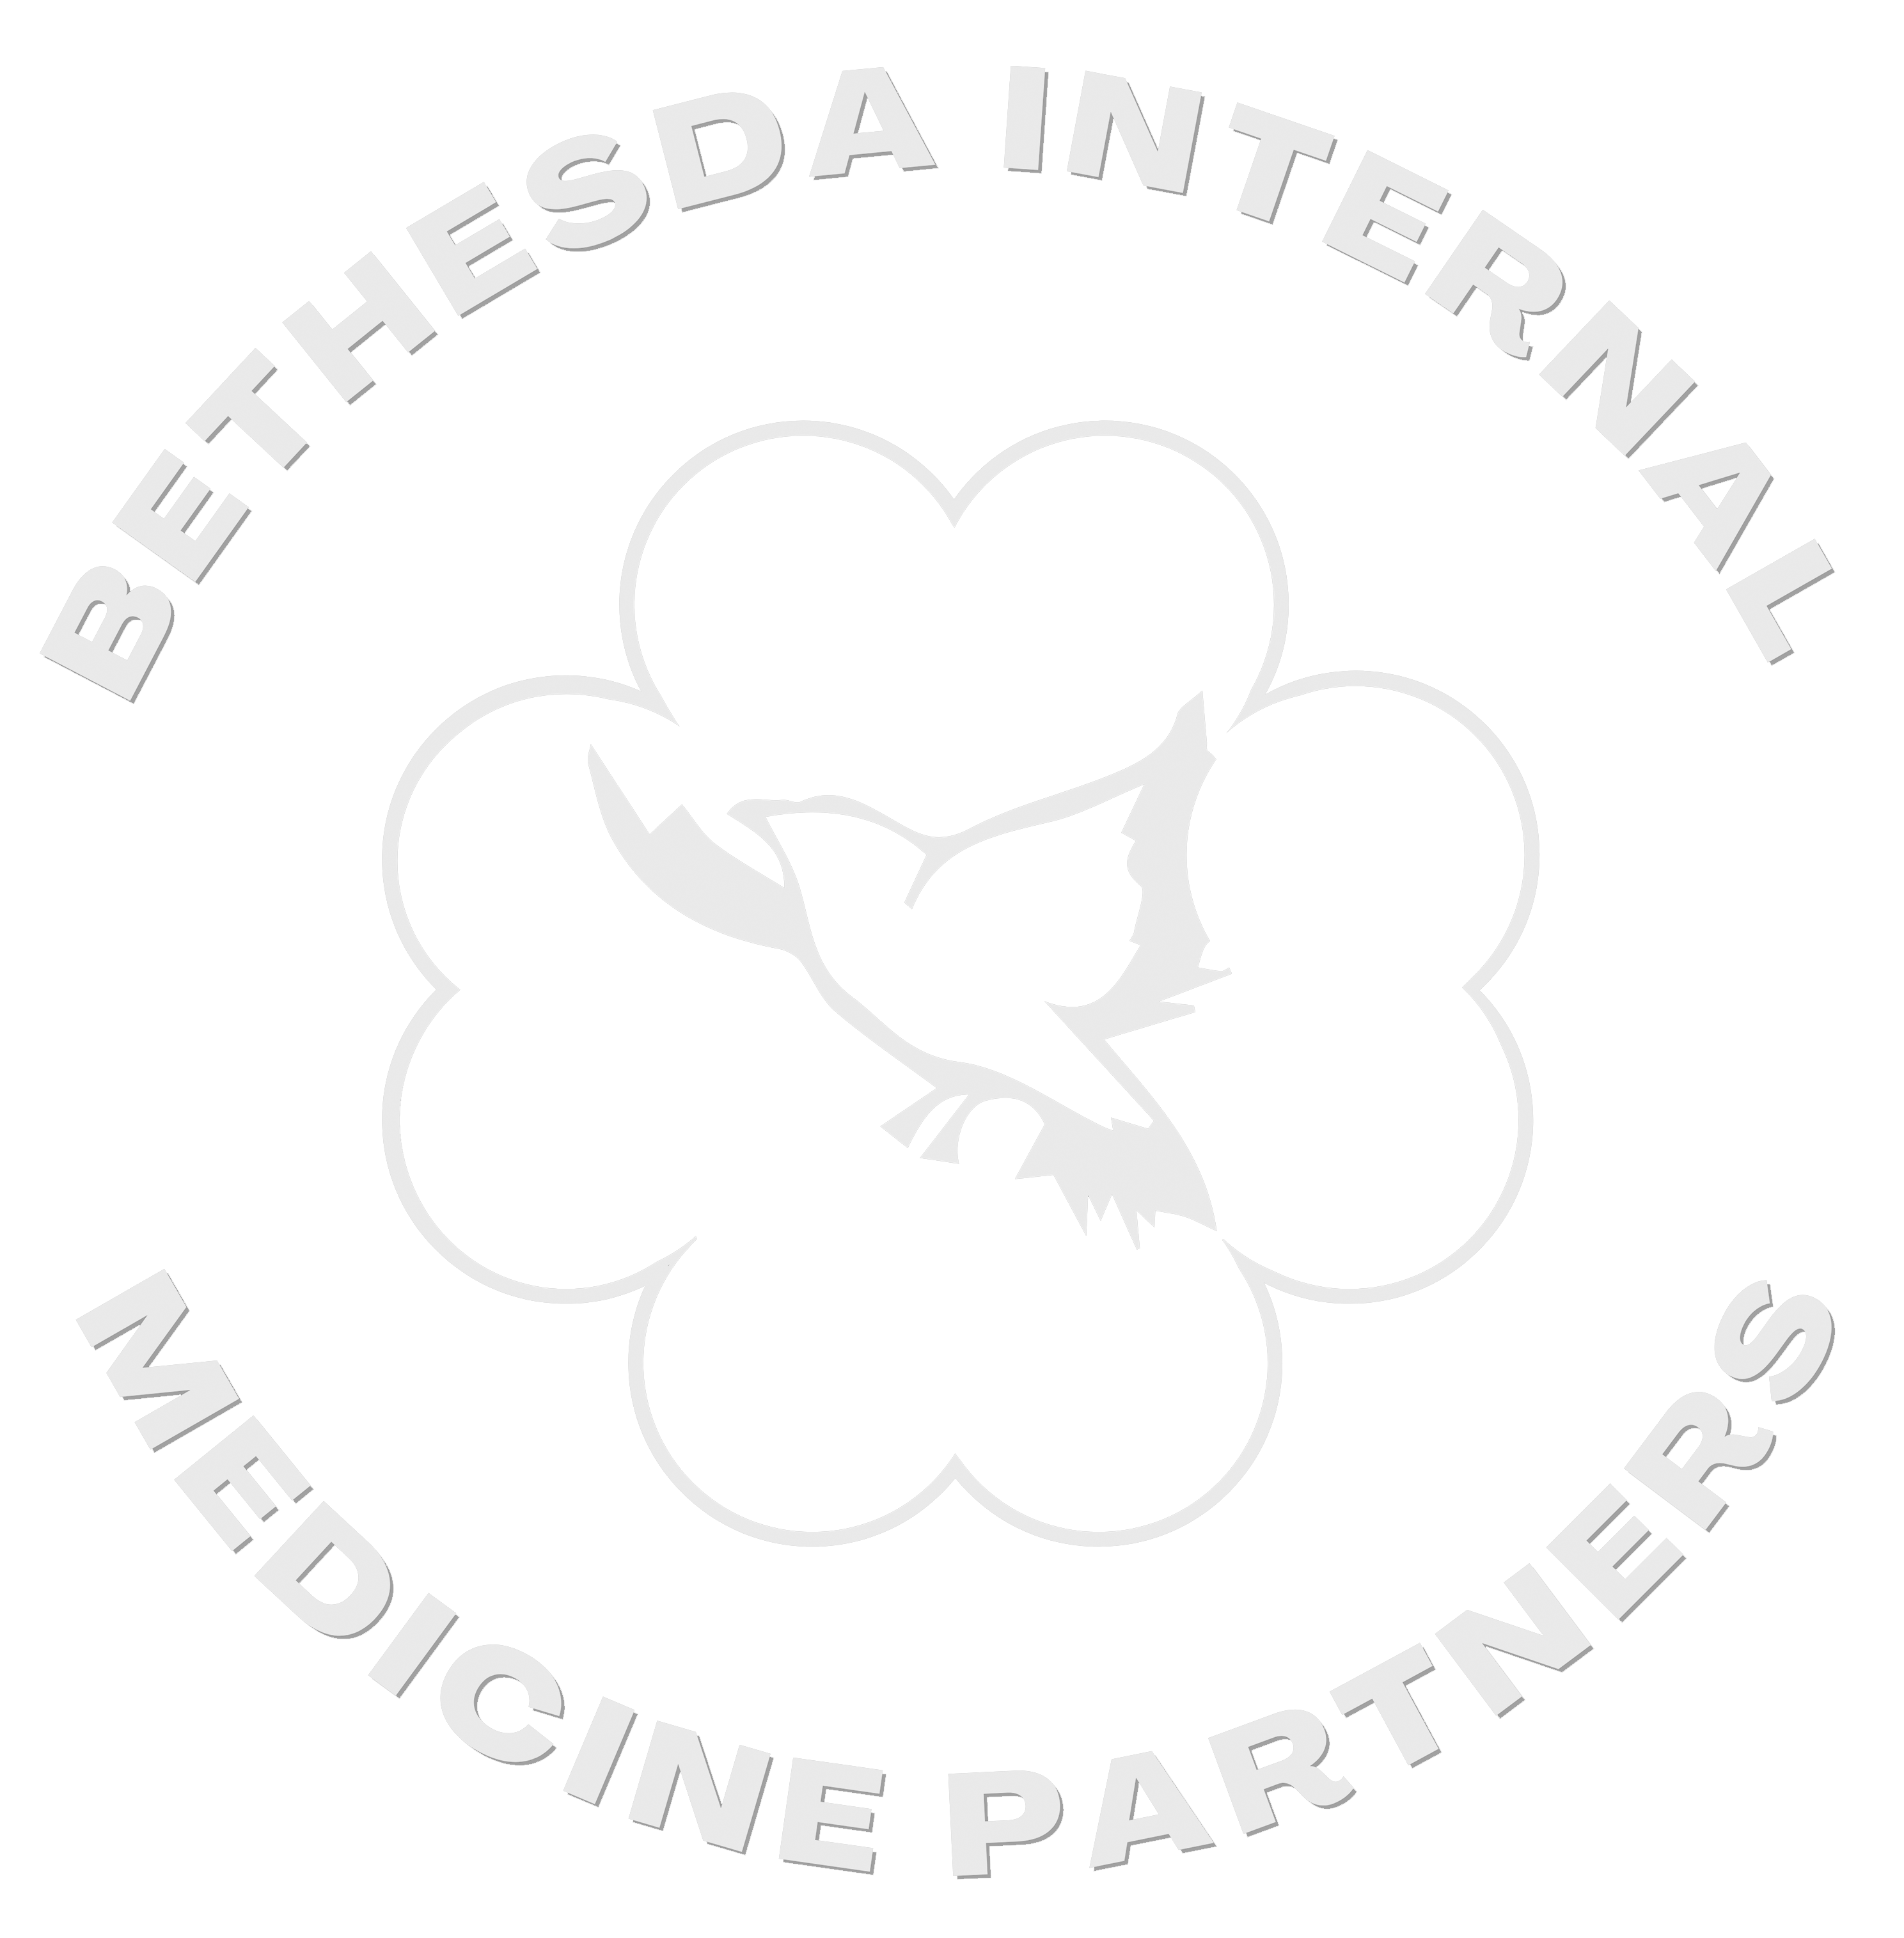 Bethesda Internal Medicine Partners LLC